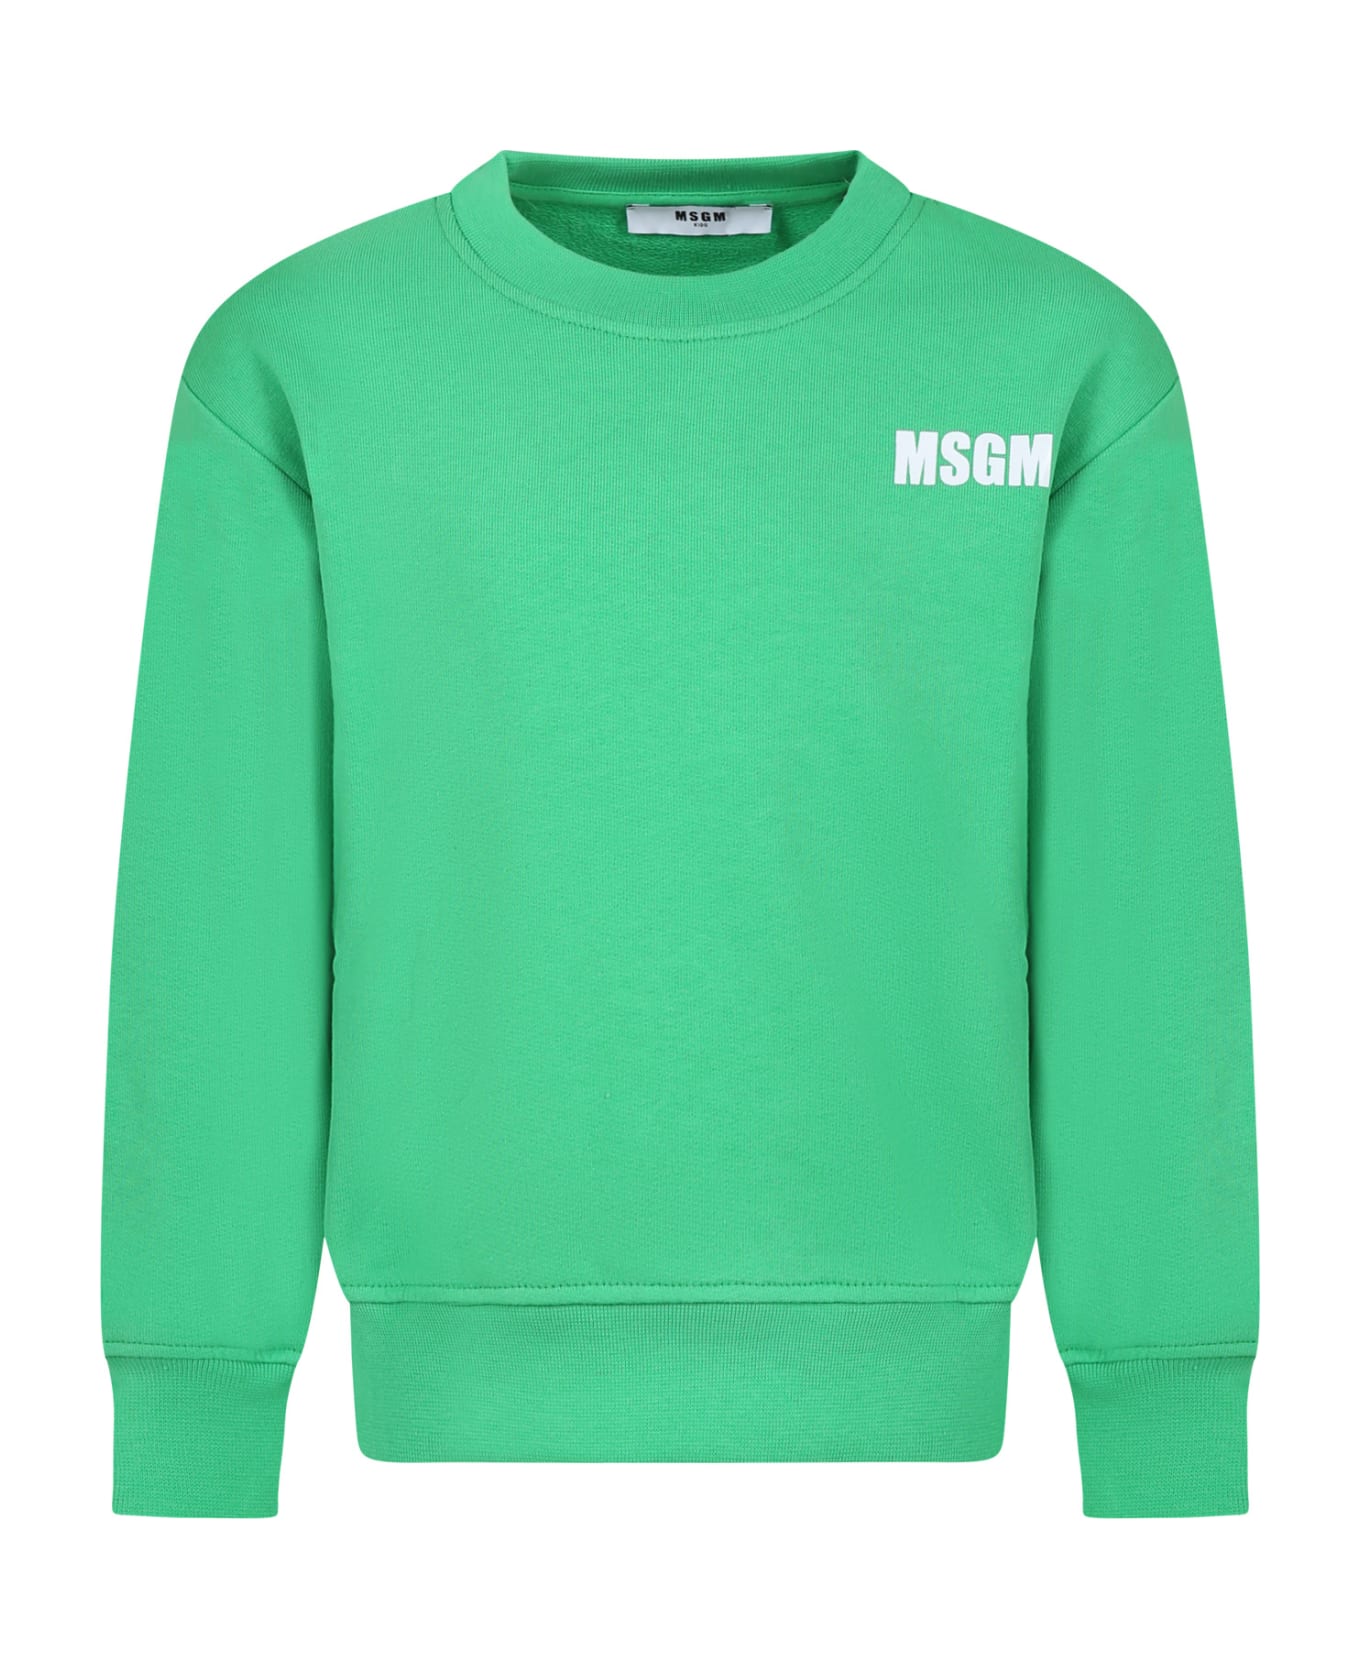 MSGM Green Sweatshirt For Kids With Logo - Green